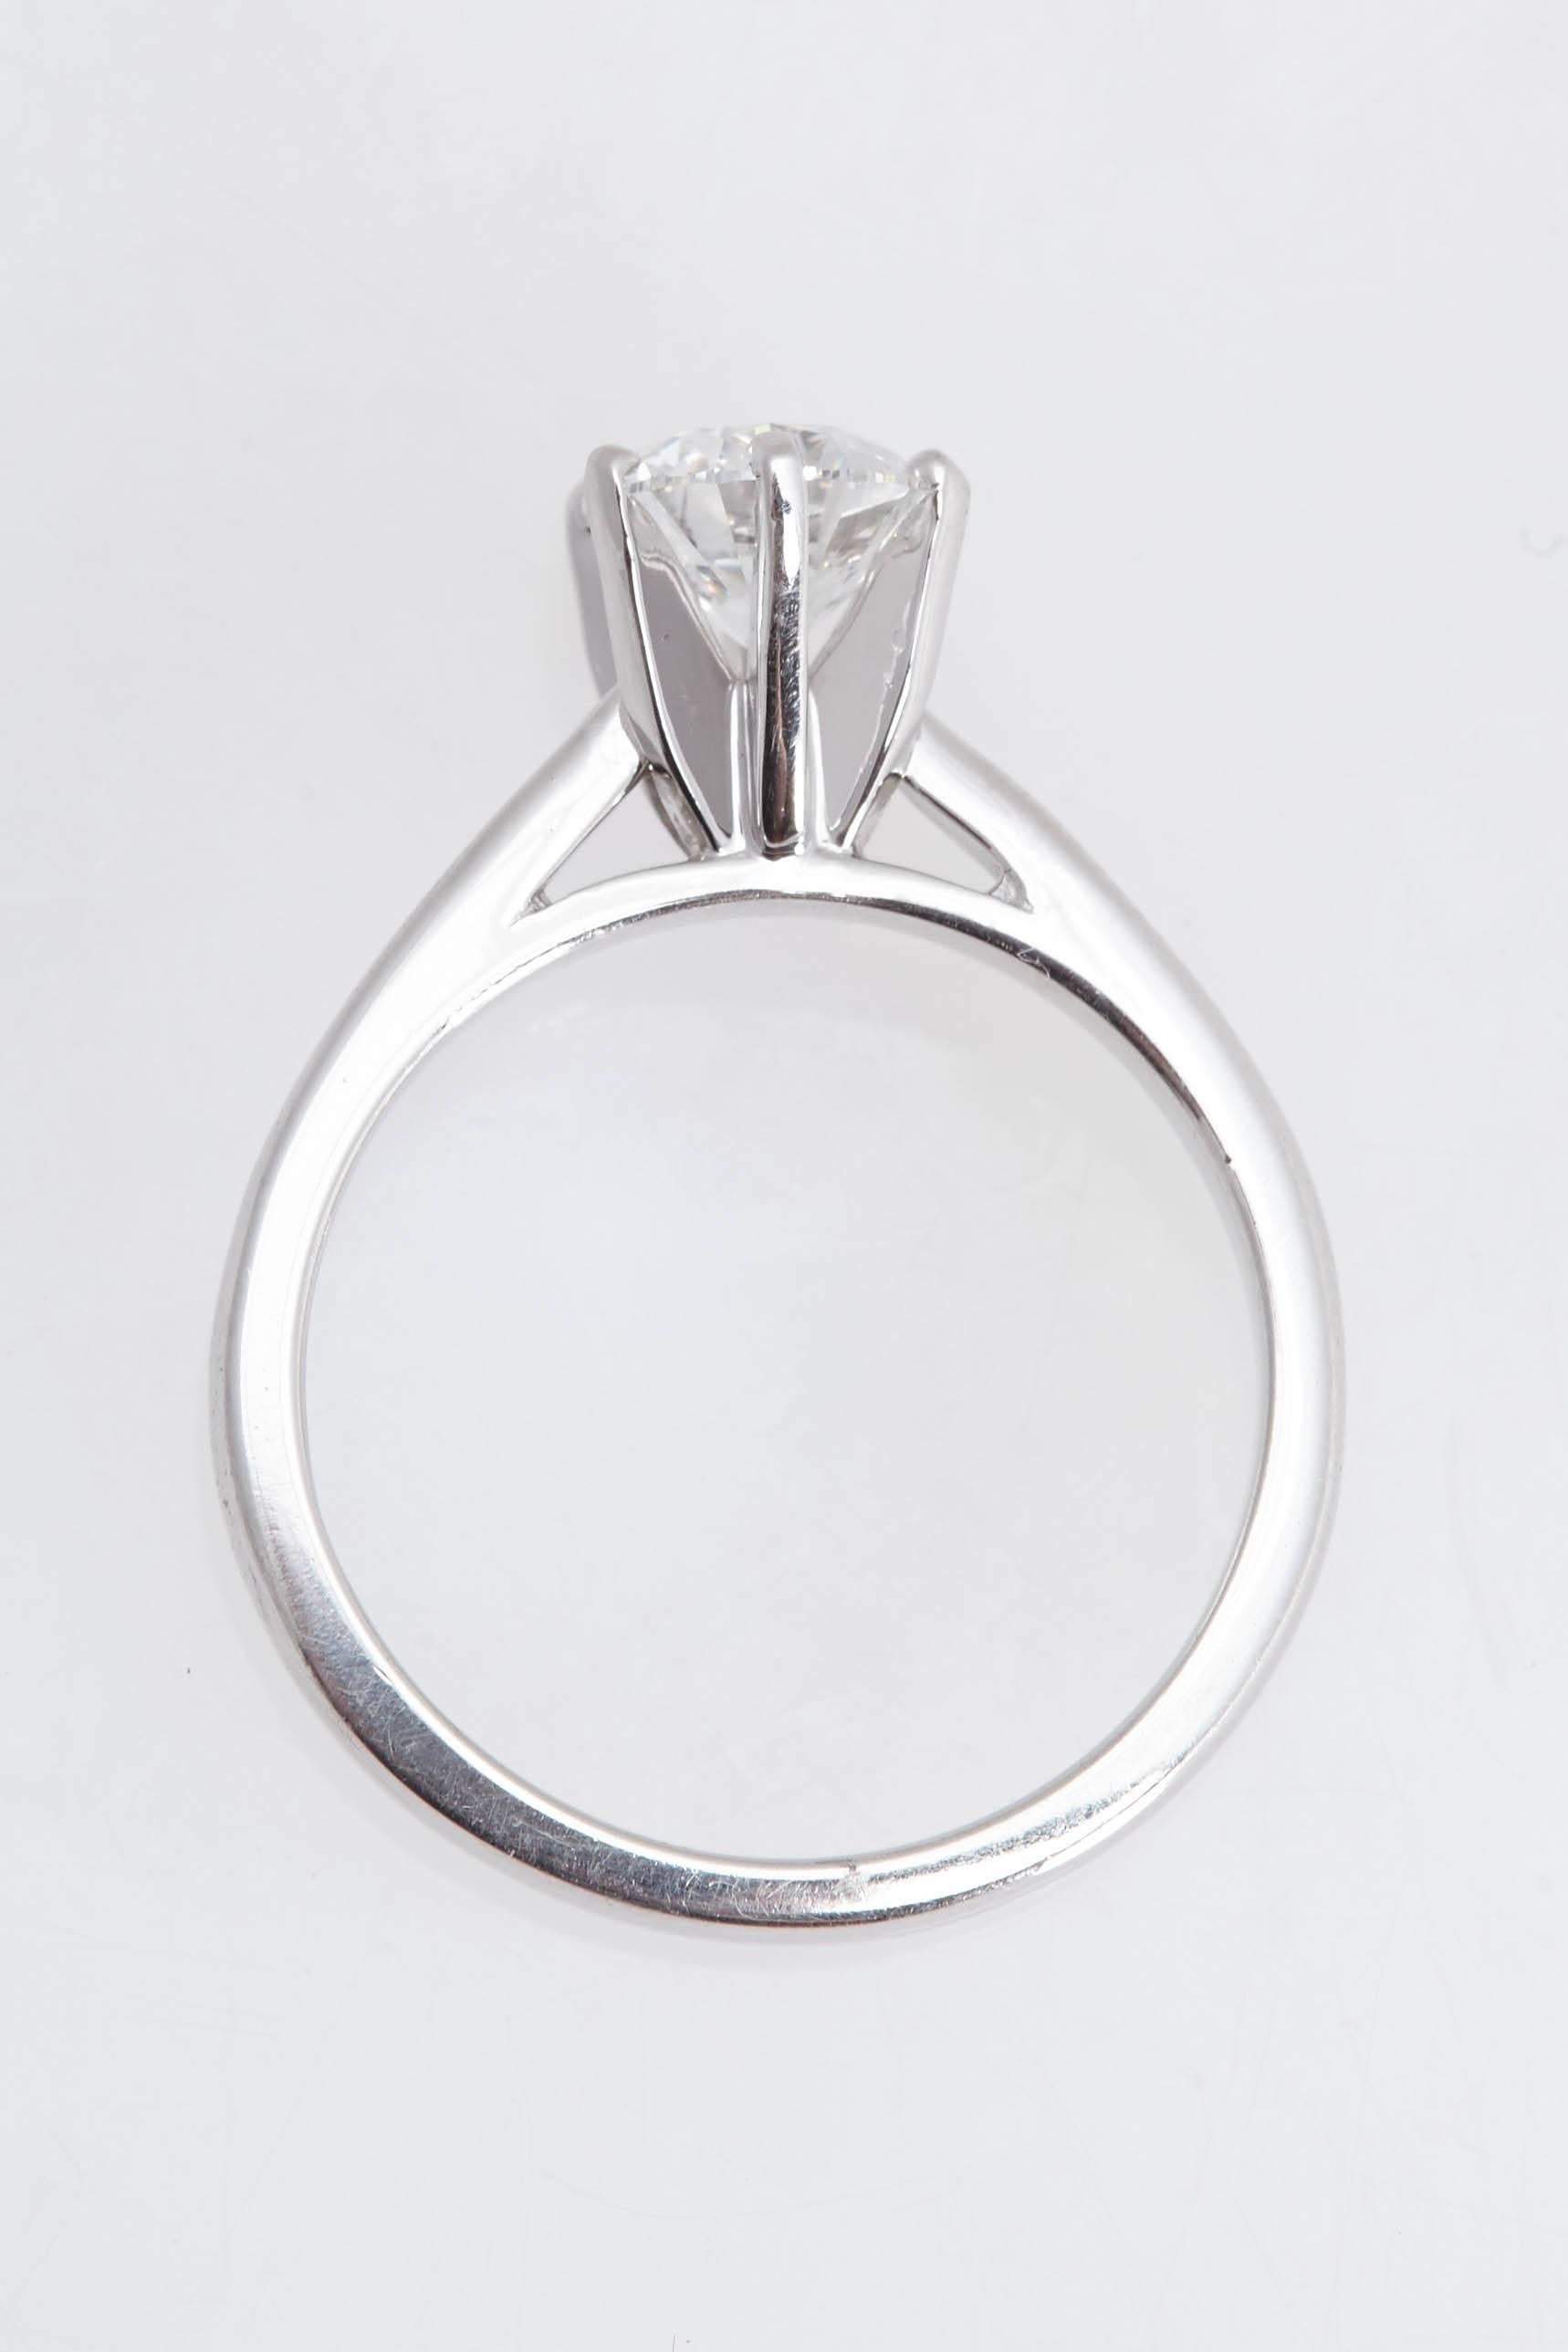 Contemporary 1.12 Carat Round Solitaire Platinum Ring EGL I/SI2 For Sale